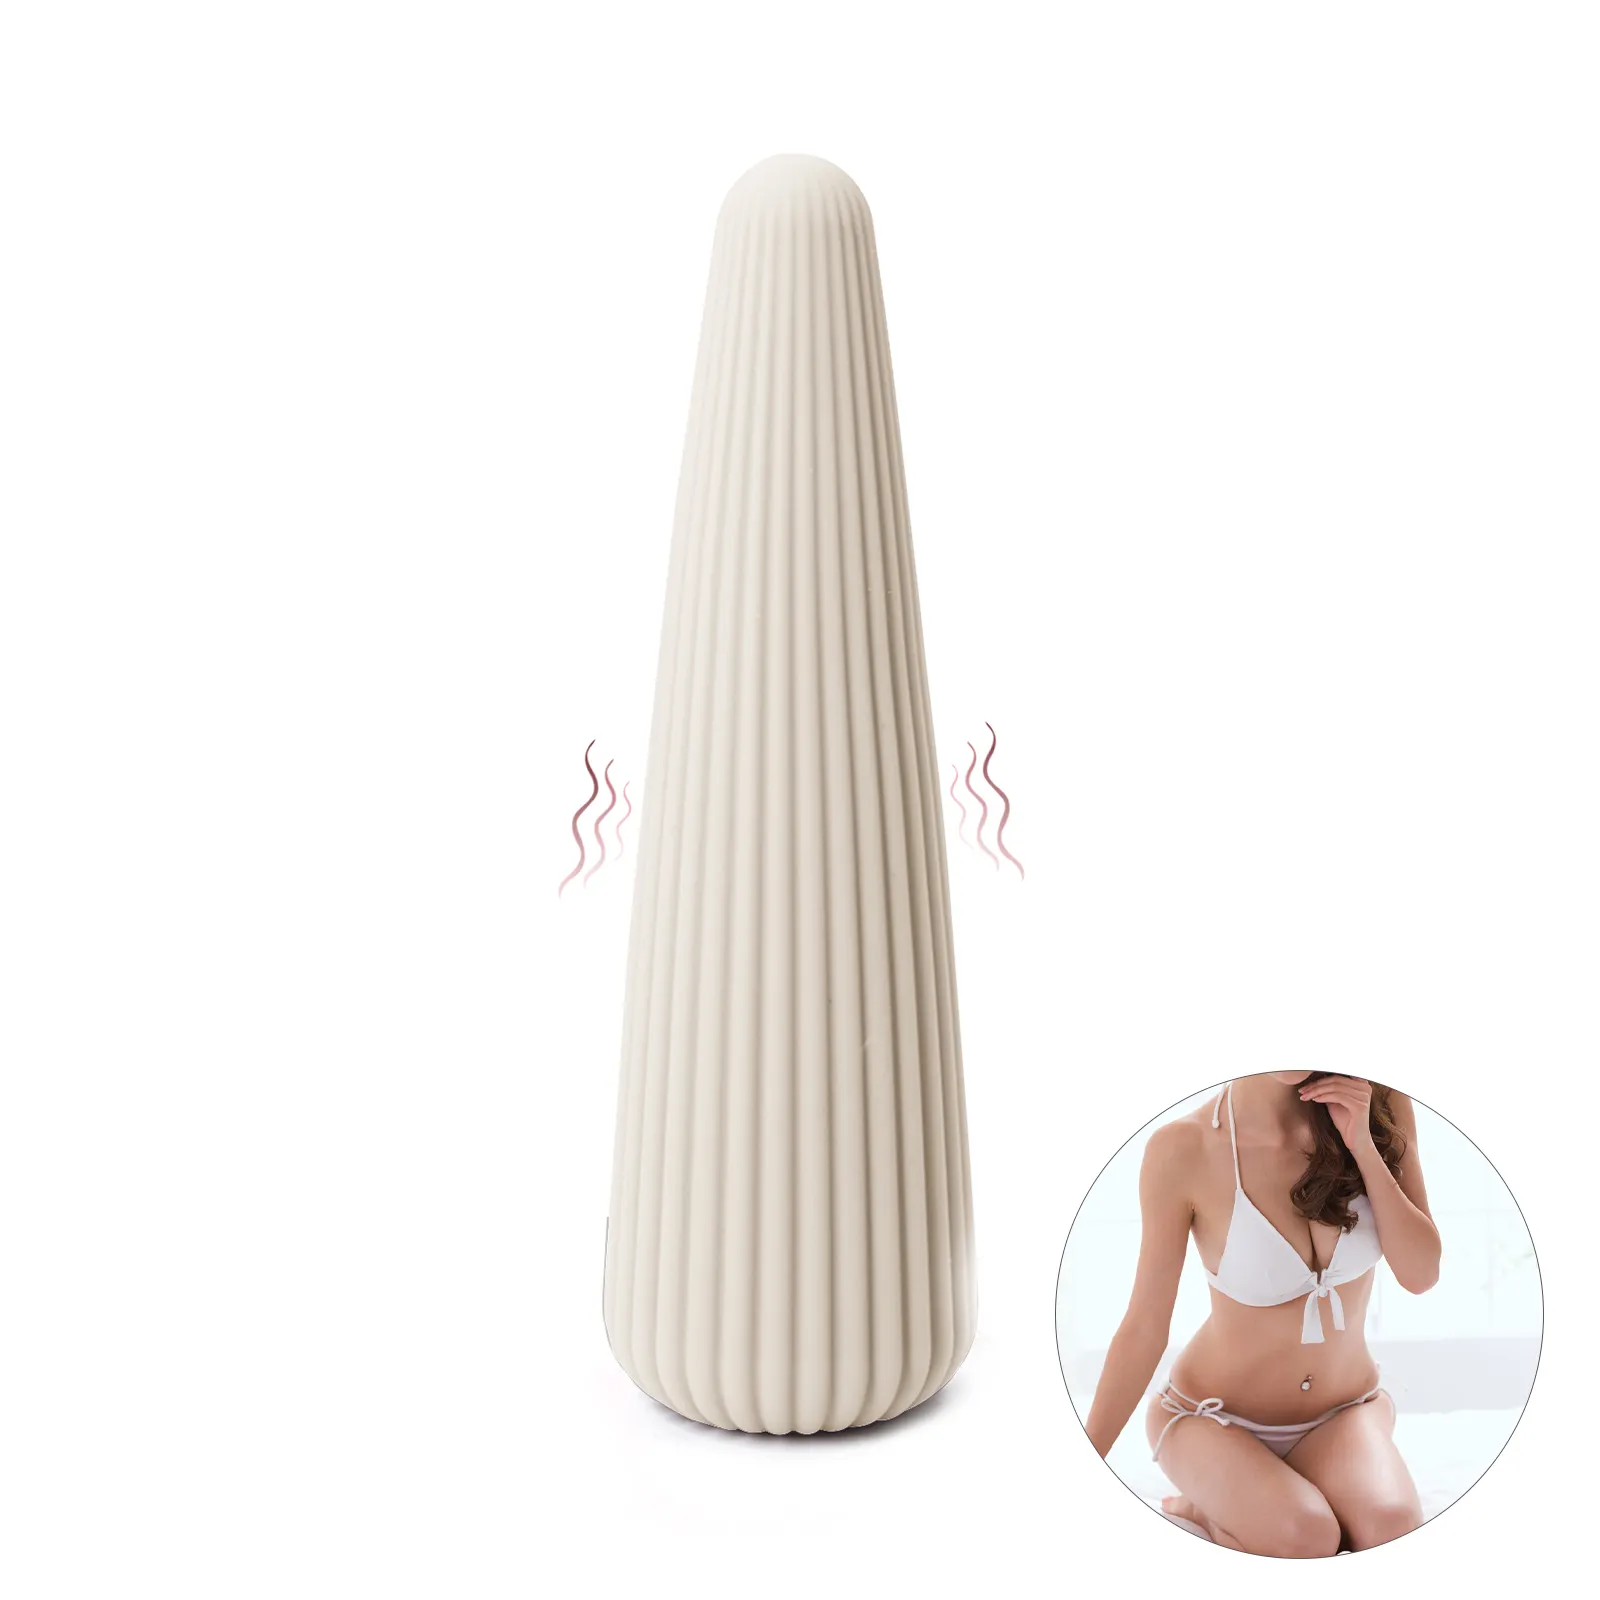 Strong Powerful Handheld Av Wand Massager Personal Adult Toys Vibrator for Women Sex Toys Dildo